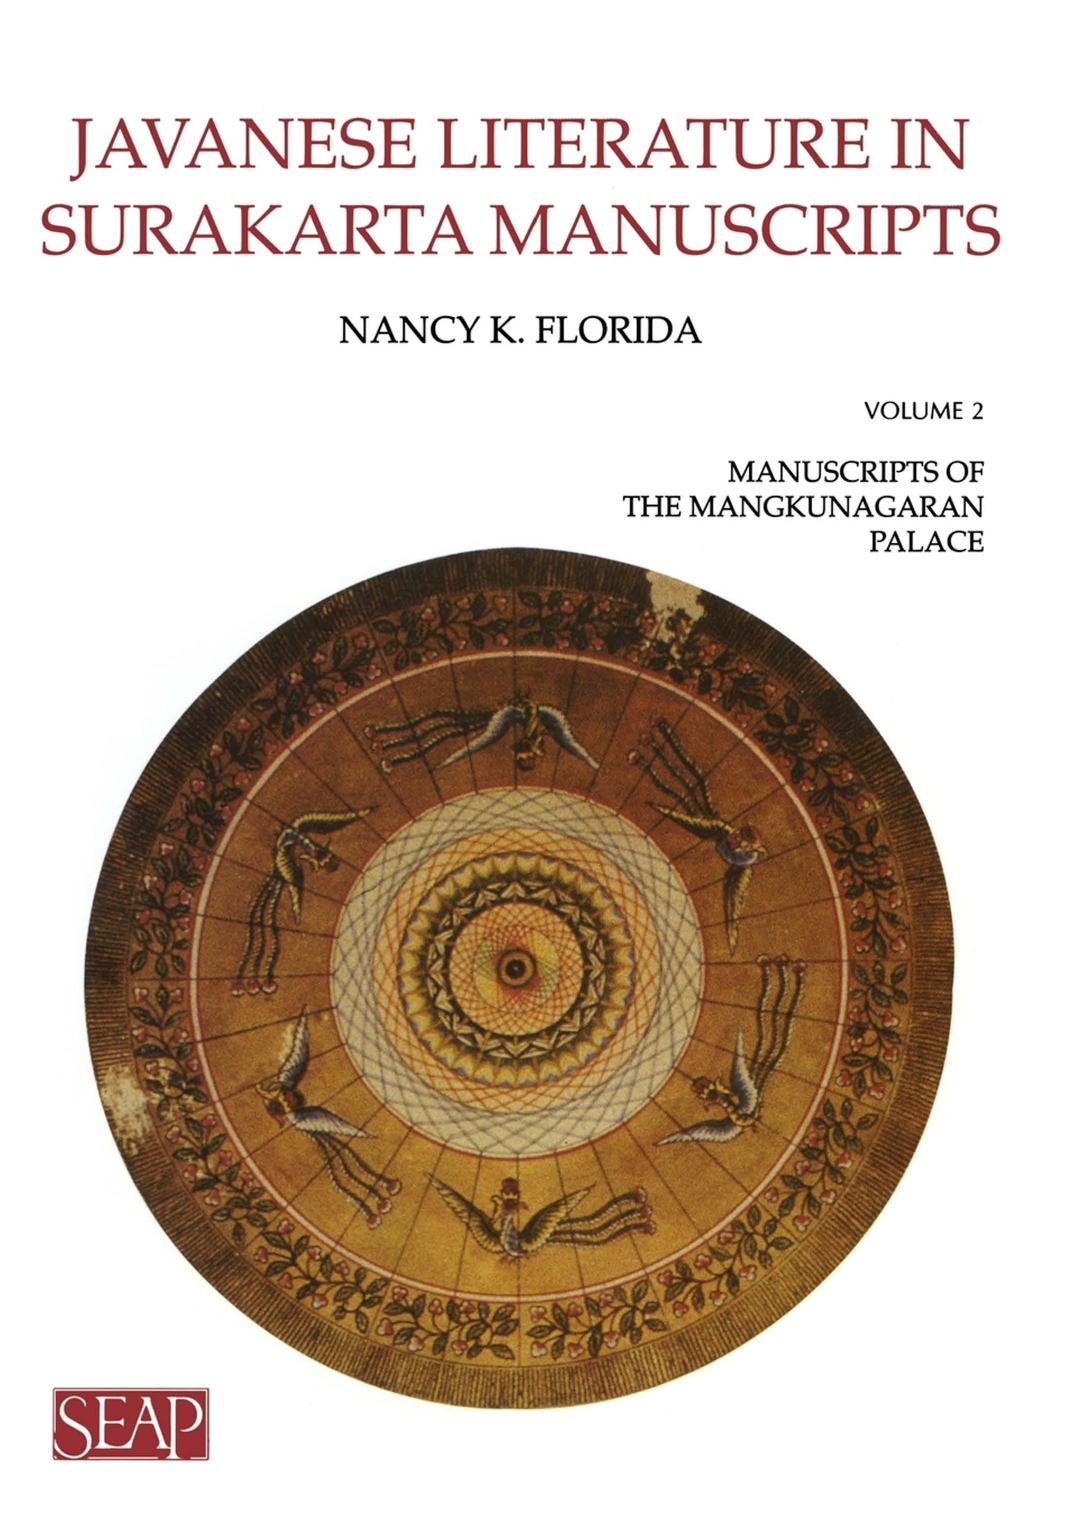 Javanese Literature in Surakarta Manuscripts: Manuscripts of the Mangkunagaran Palace by Nancy K. Florida